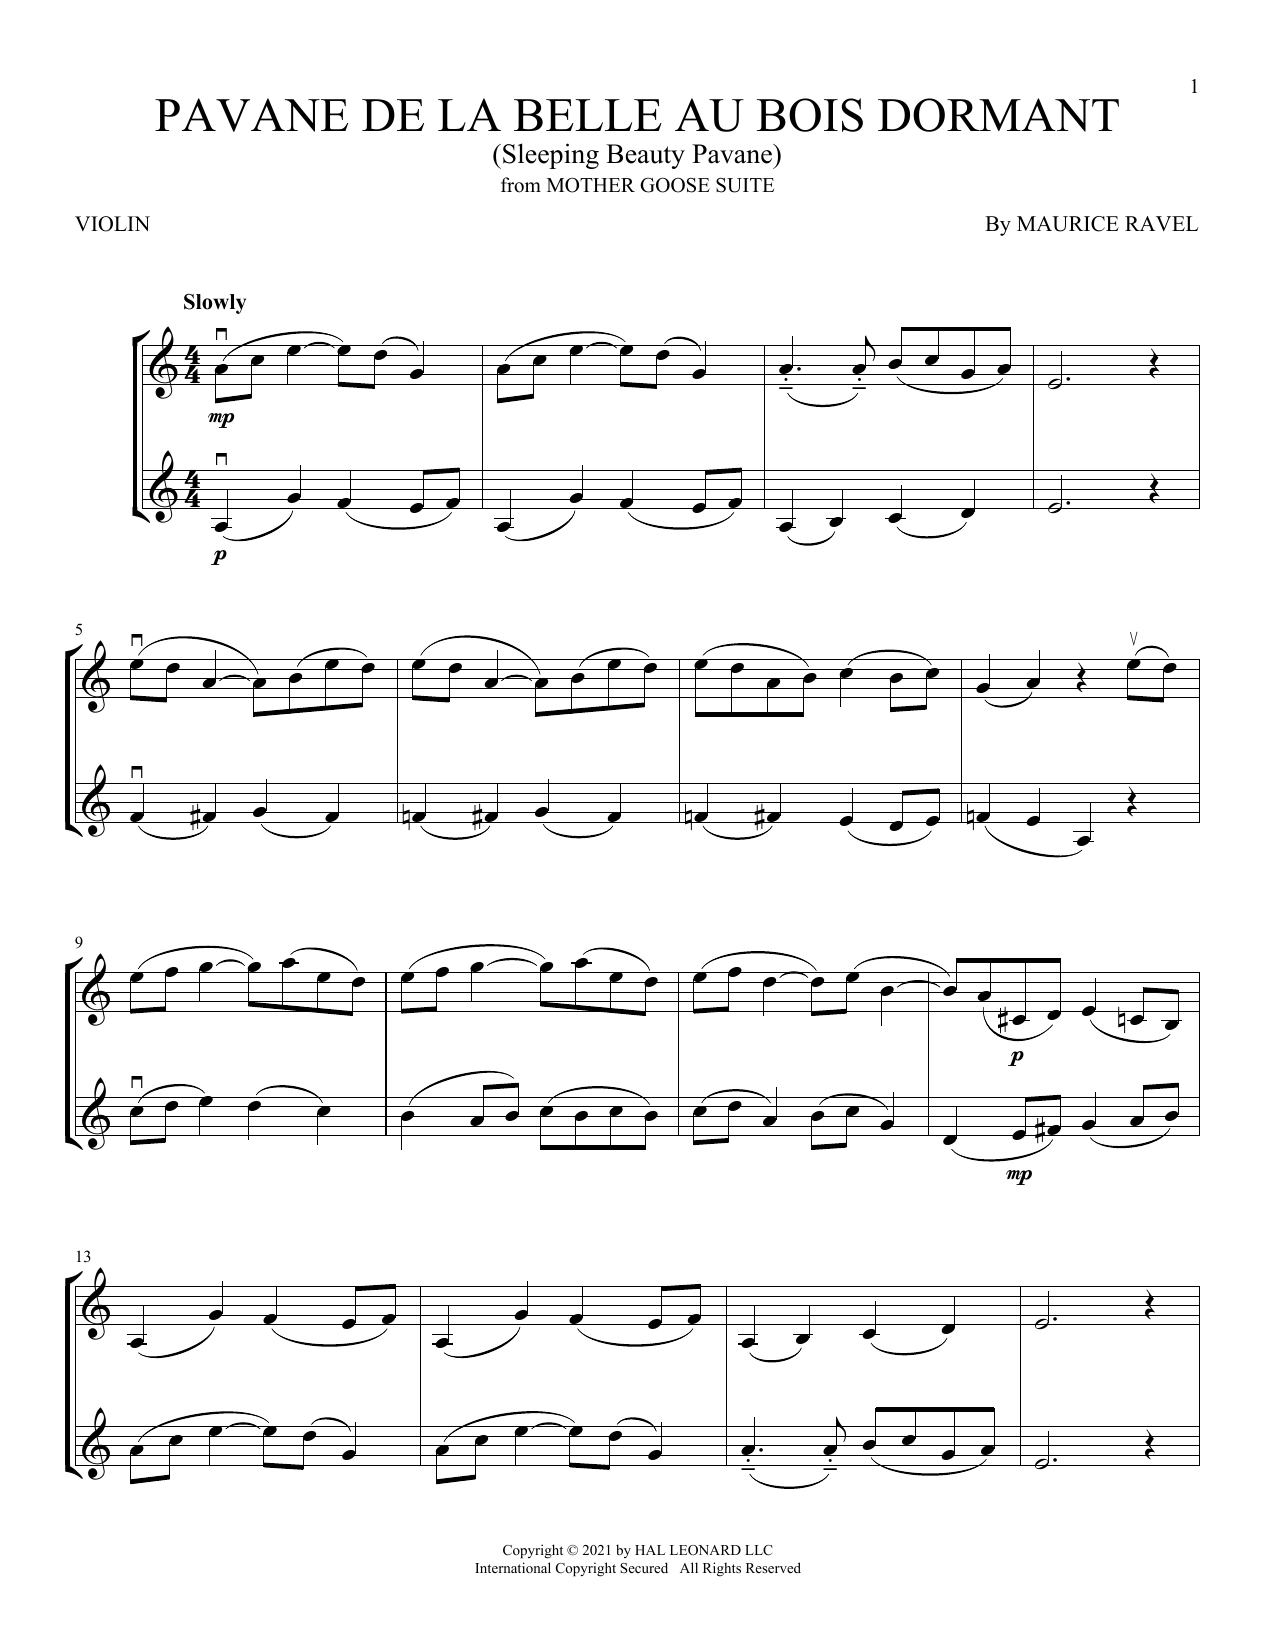 Download Maurice Ravel Pavane de la belle au bois dormant (Sleeping Beauty Pavane) Sheet Music and learn how to play Violin Duet PDF digital score in minutes